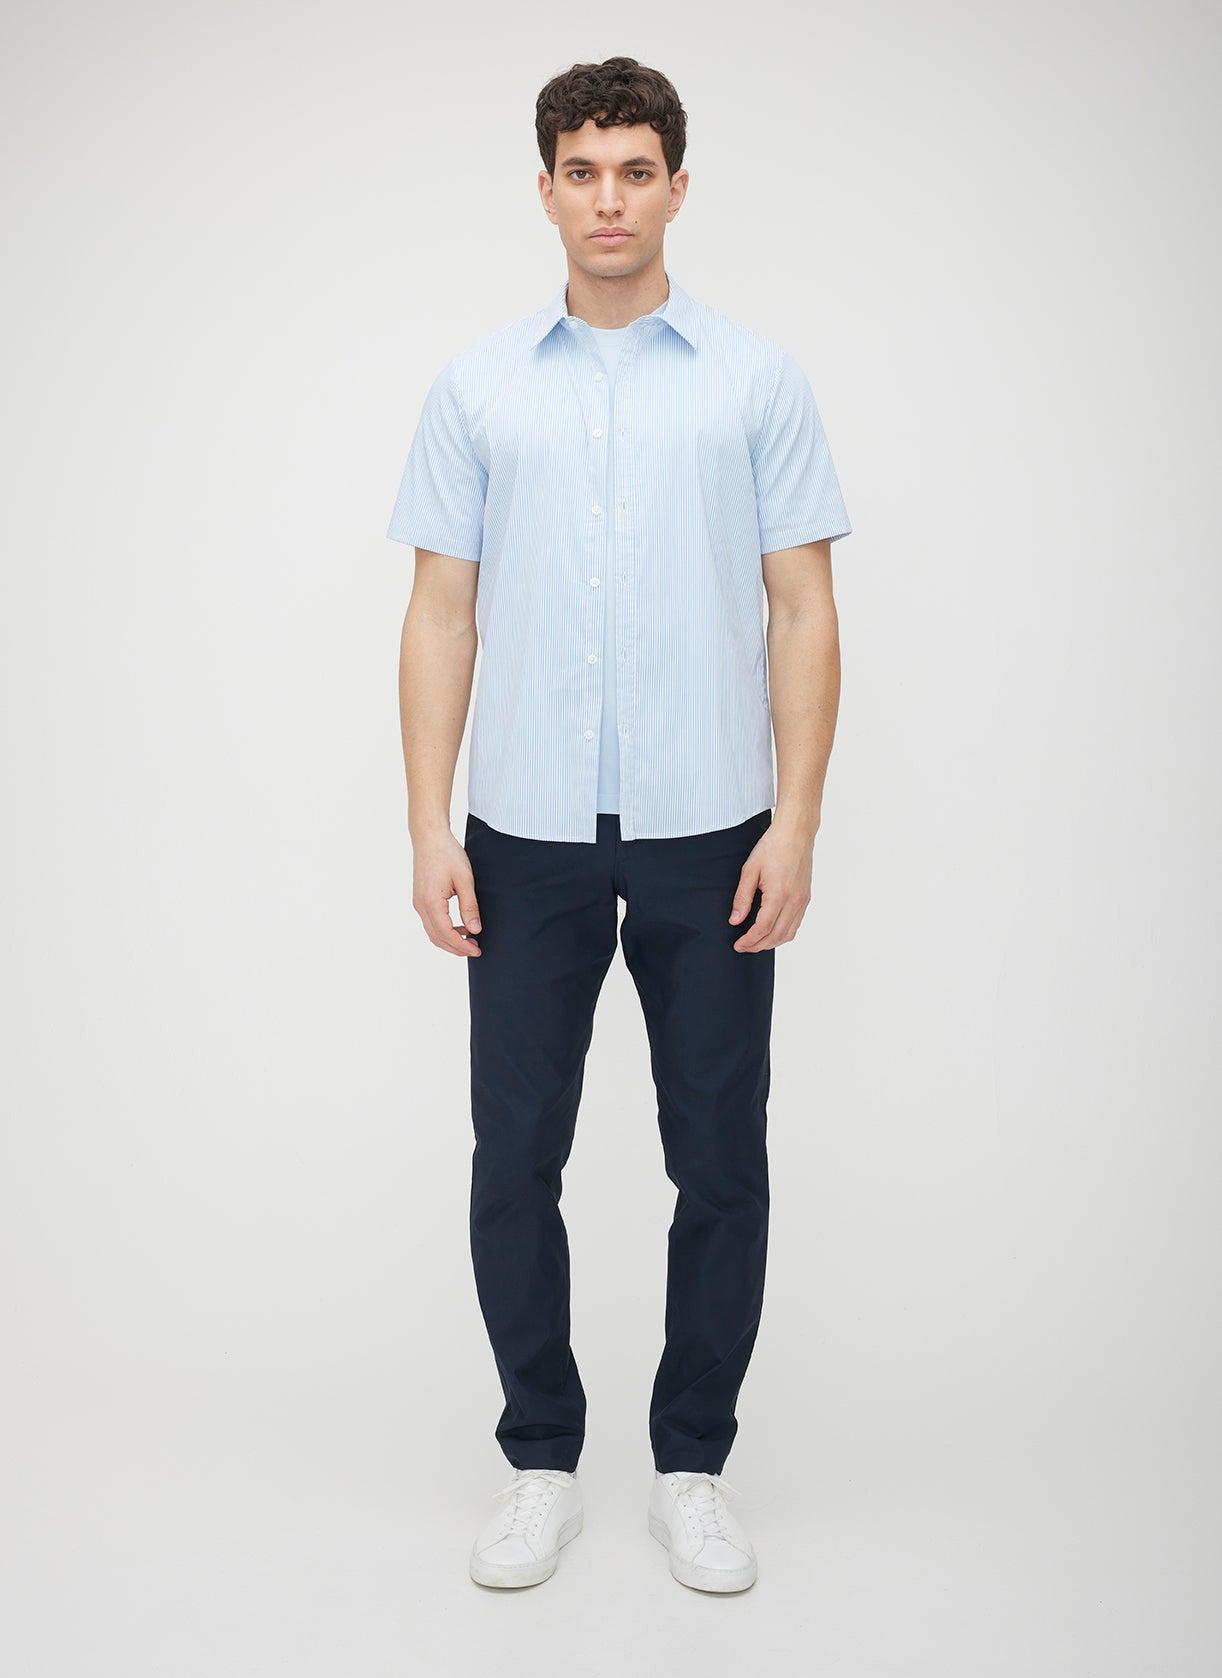 Acadia Short Sleeve Poplin Shirt ?? | M || Bright White/Cool Blue Stripe